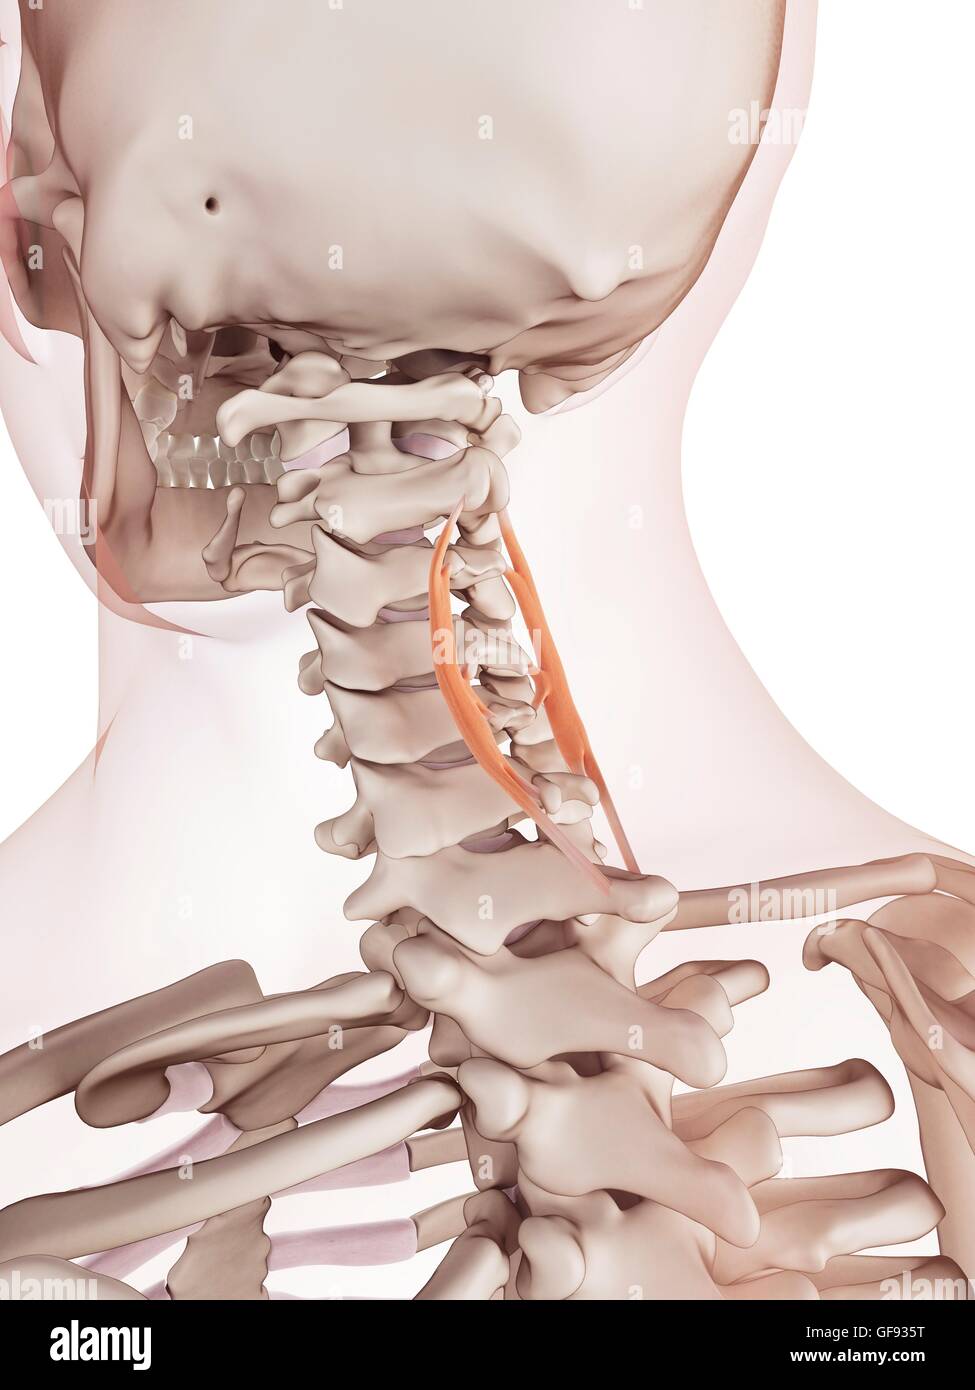 Human neck muscles, illustration. Stock Photo